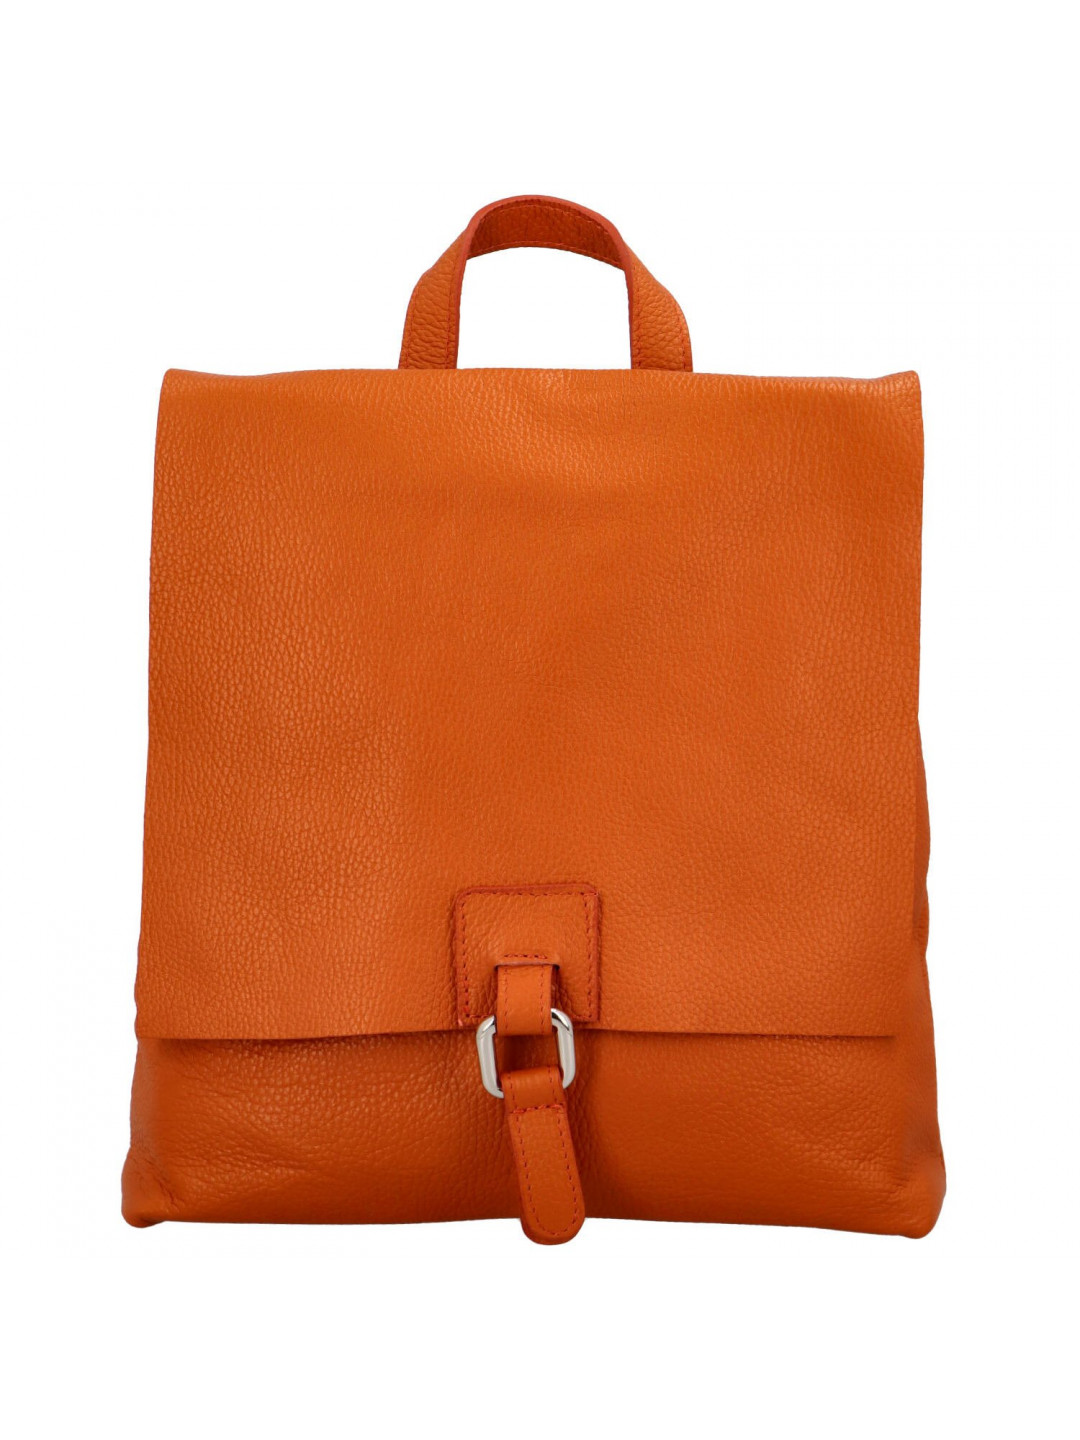 Dámský kožený batůžek kabelka oranžový – Delami Vera Pelle Francesco